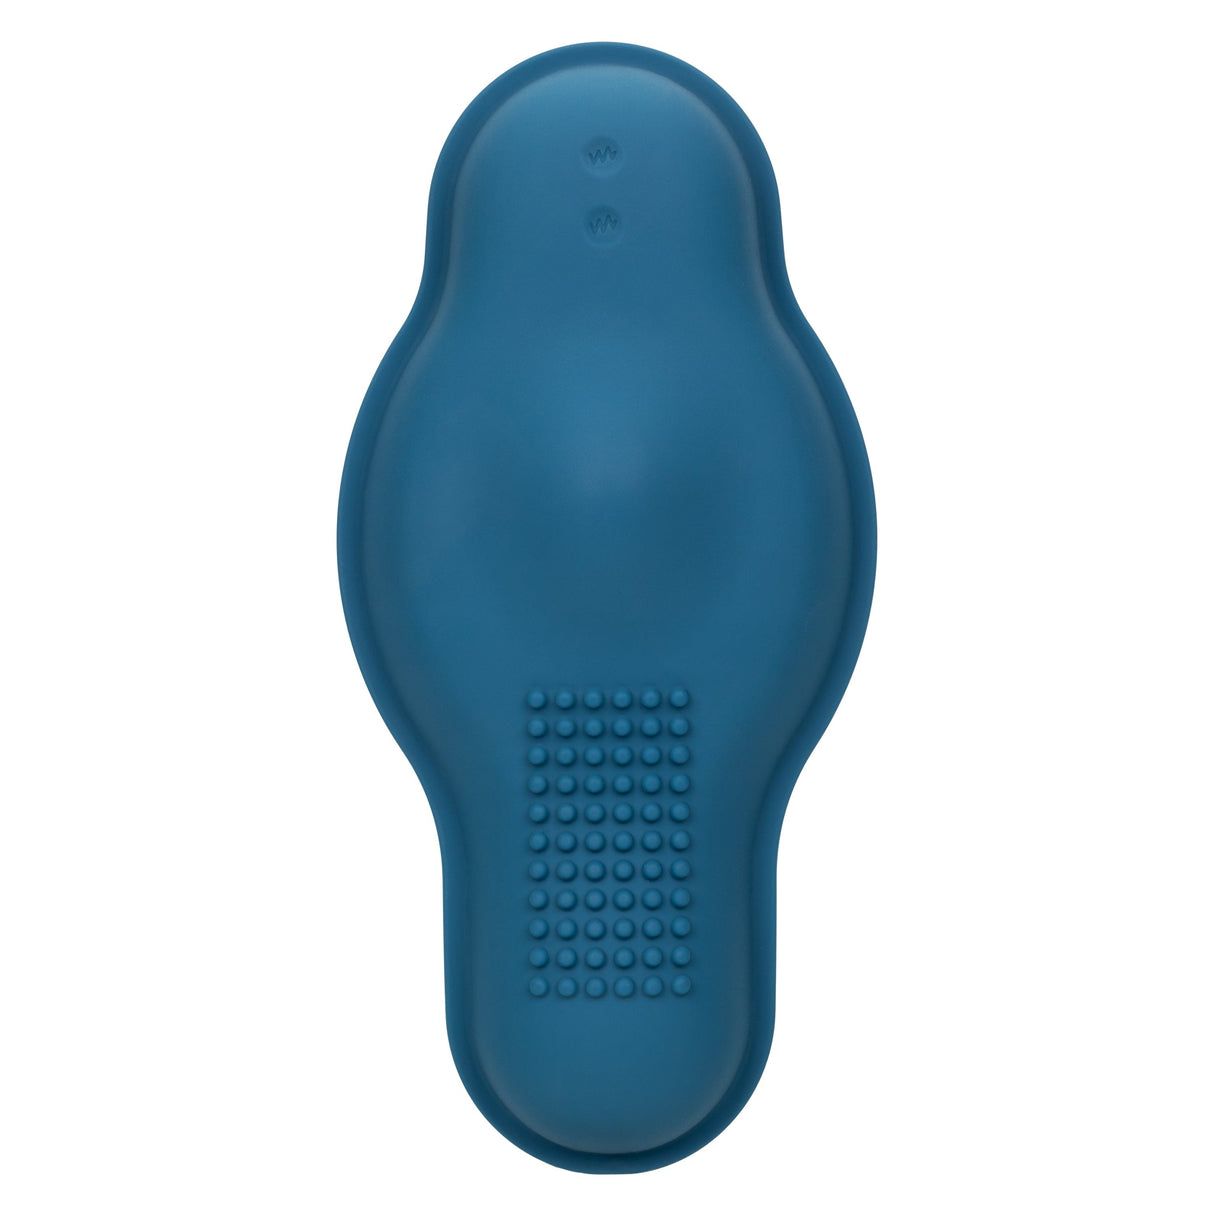 California Exotics - Dual Rider Remote Control Bump & Grind Clit Massager (Blue) CE2014 CherryAffairs